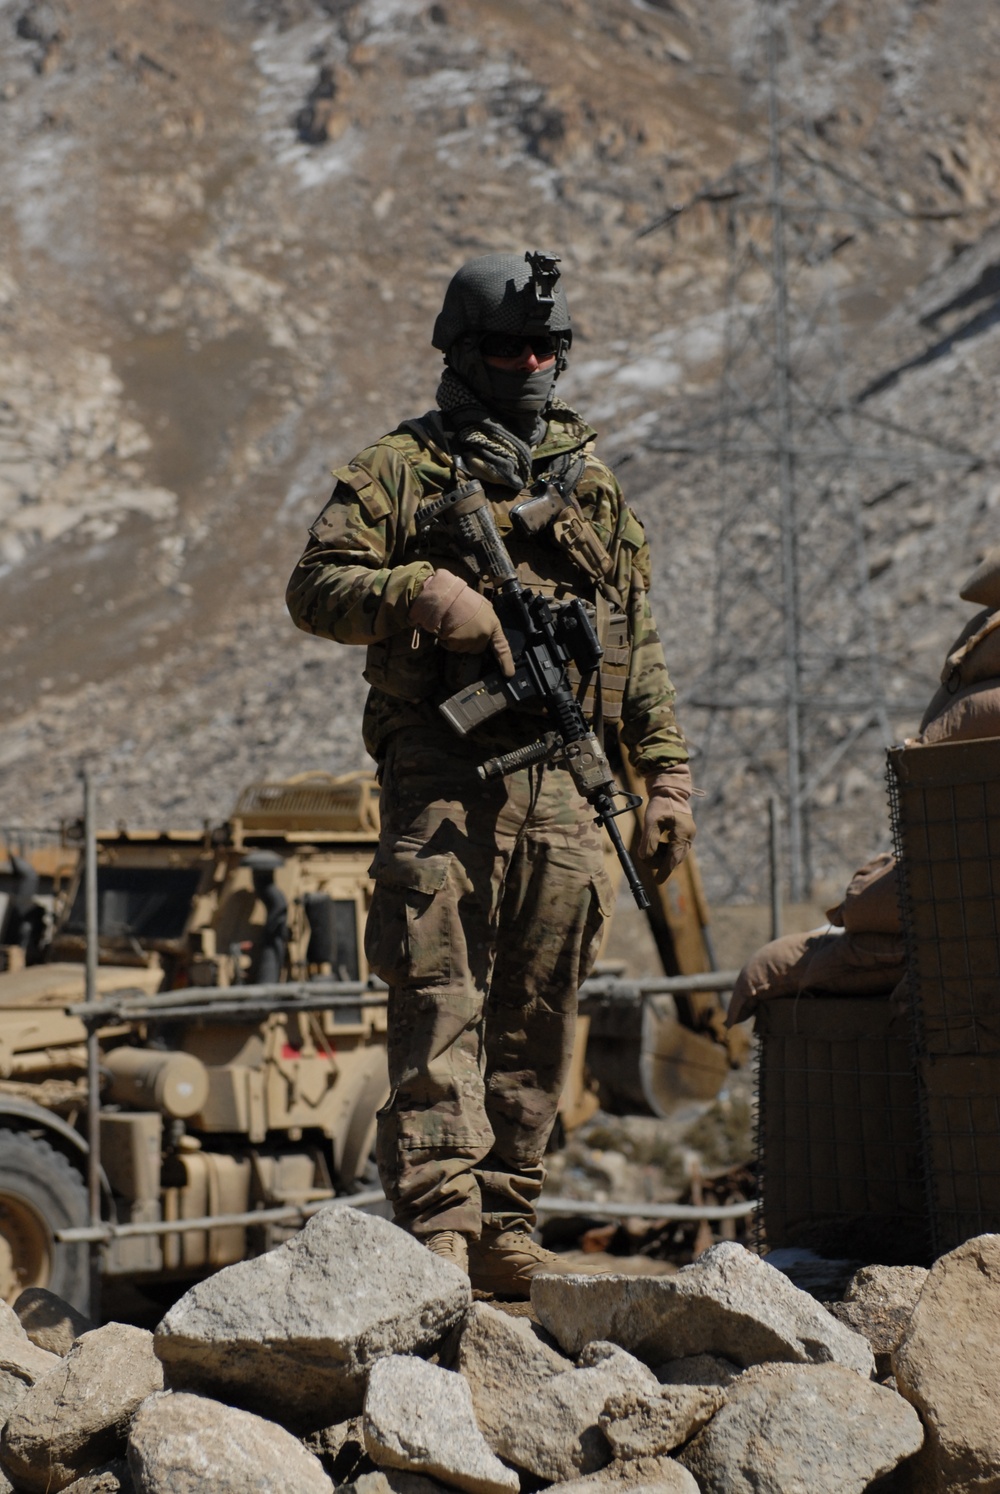 Mountain Blade: partnership slices through historic Afghan pass